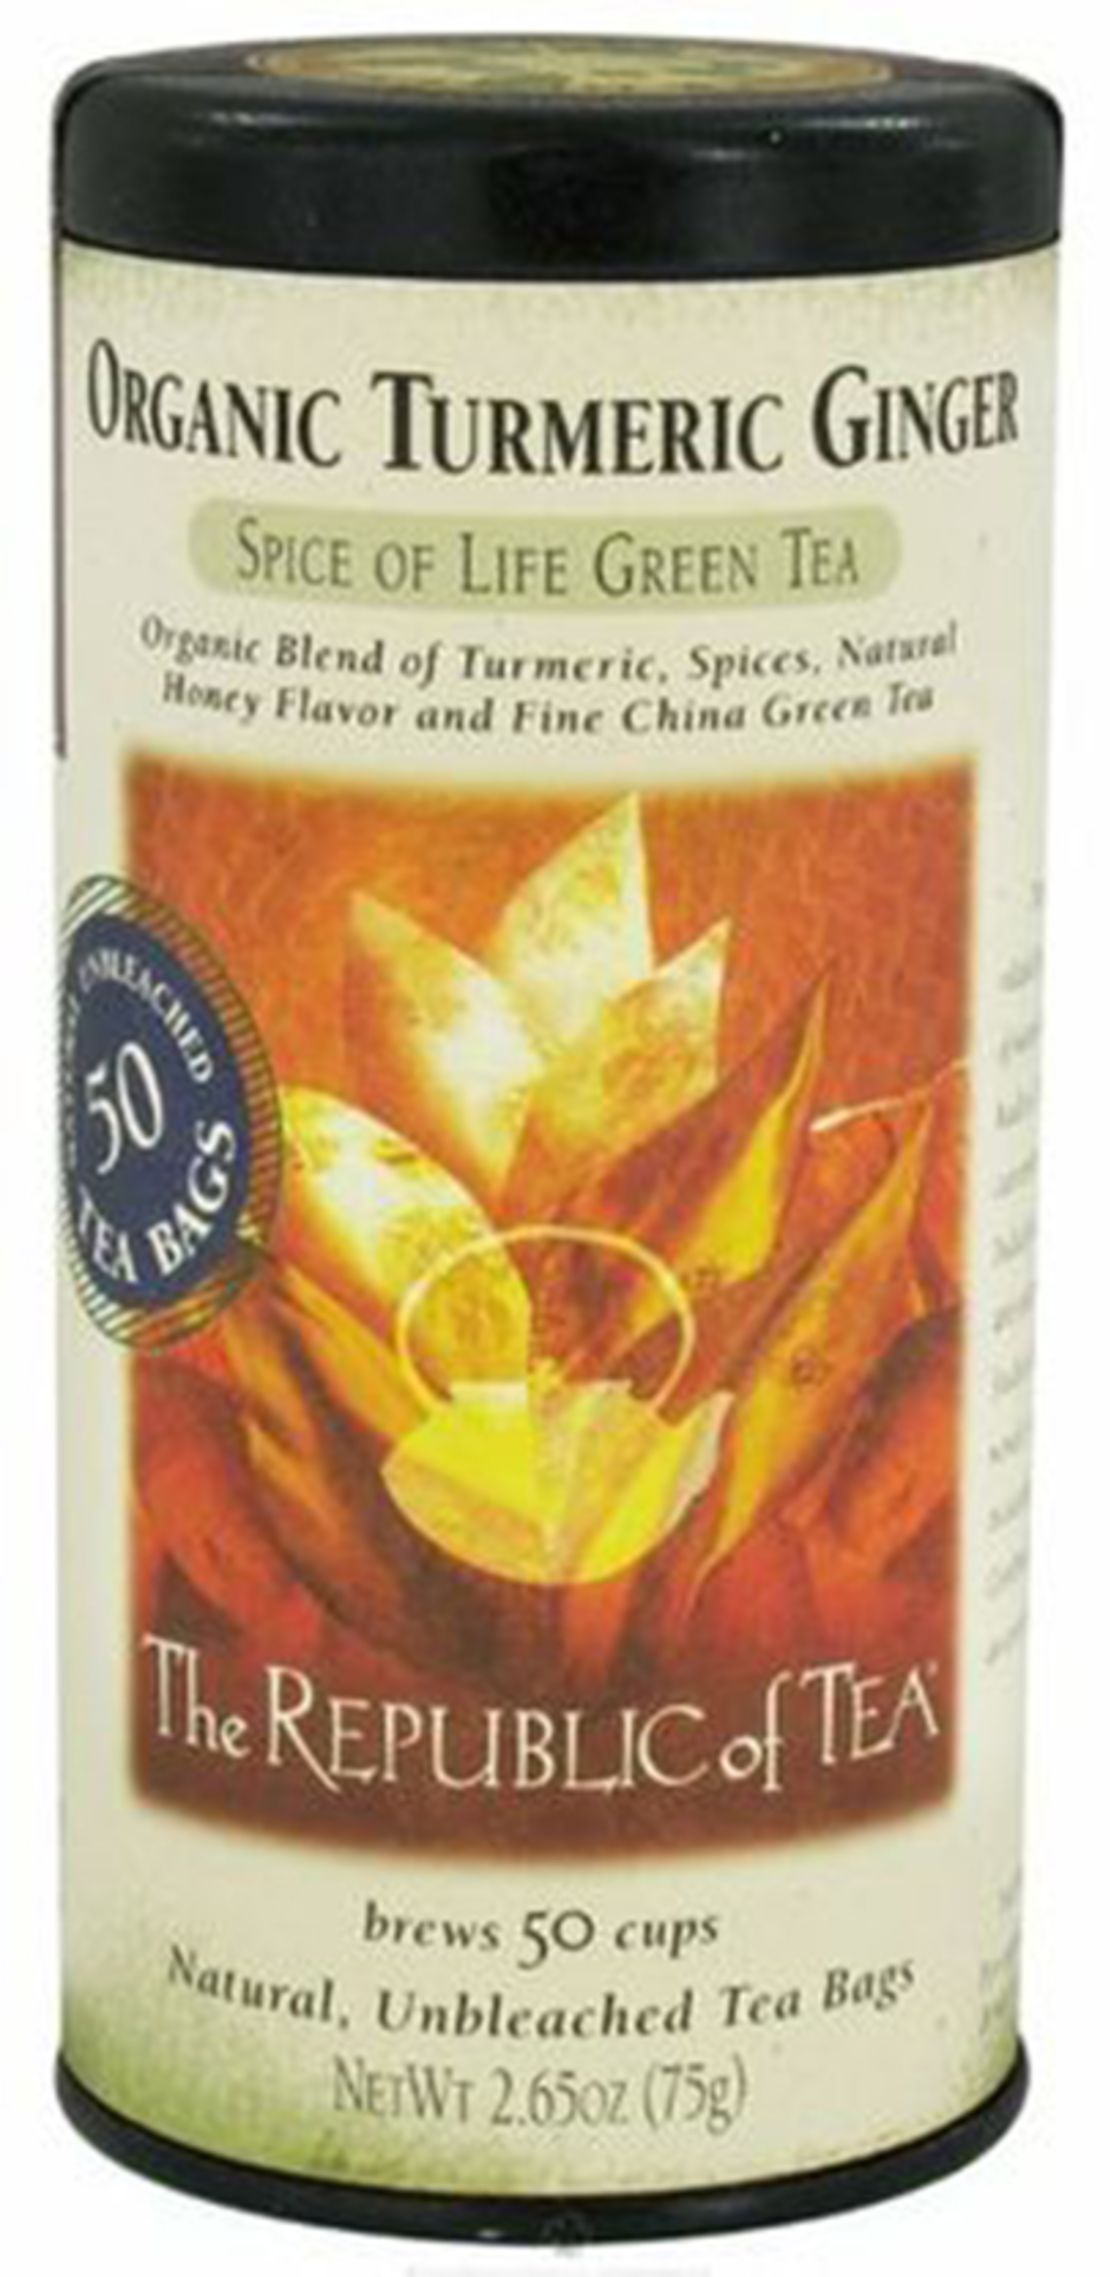 The Republic of Tea is voluntarily recalling its organic turmeric ginger tea.